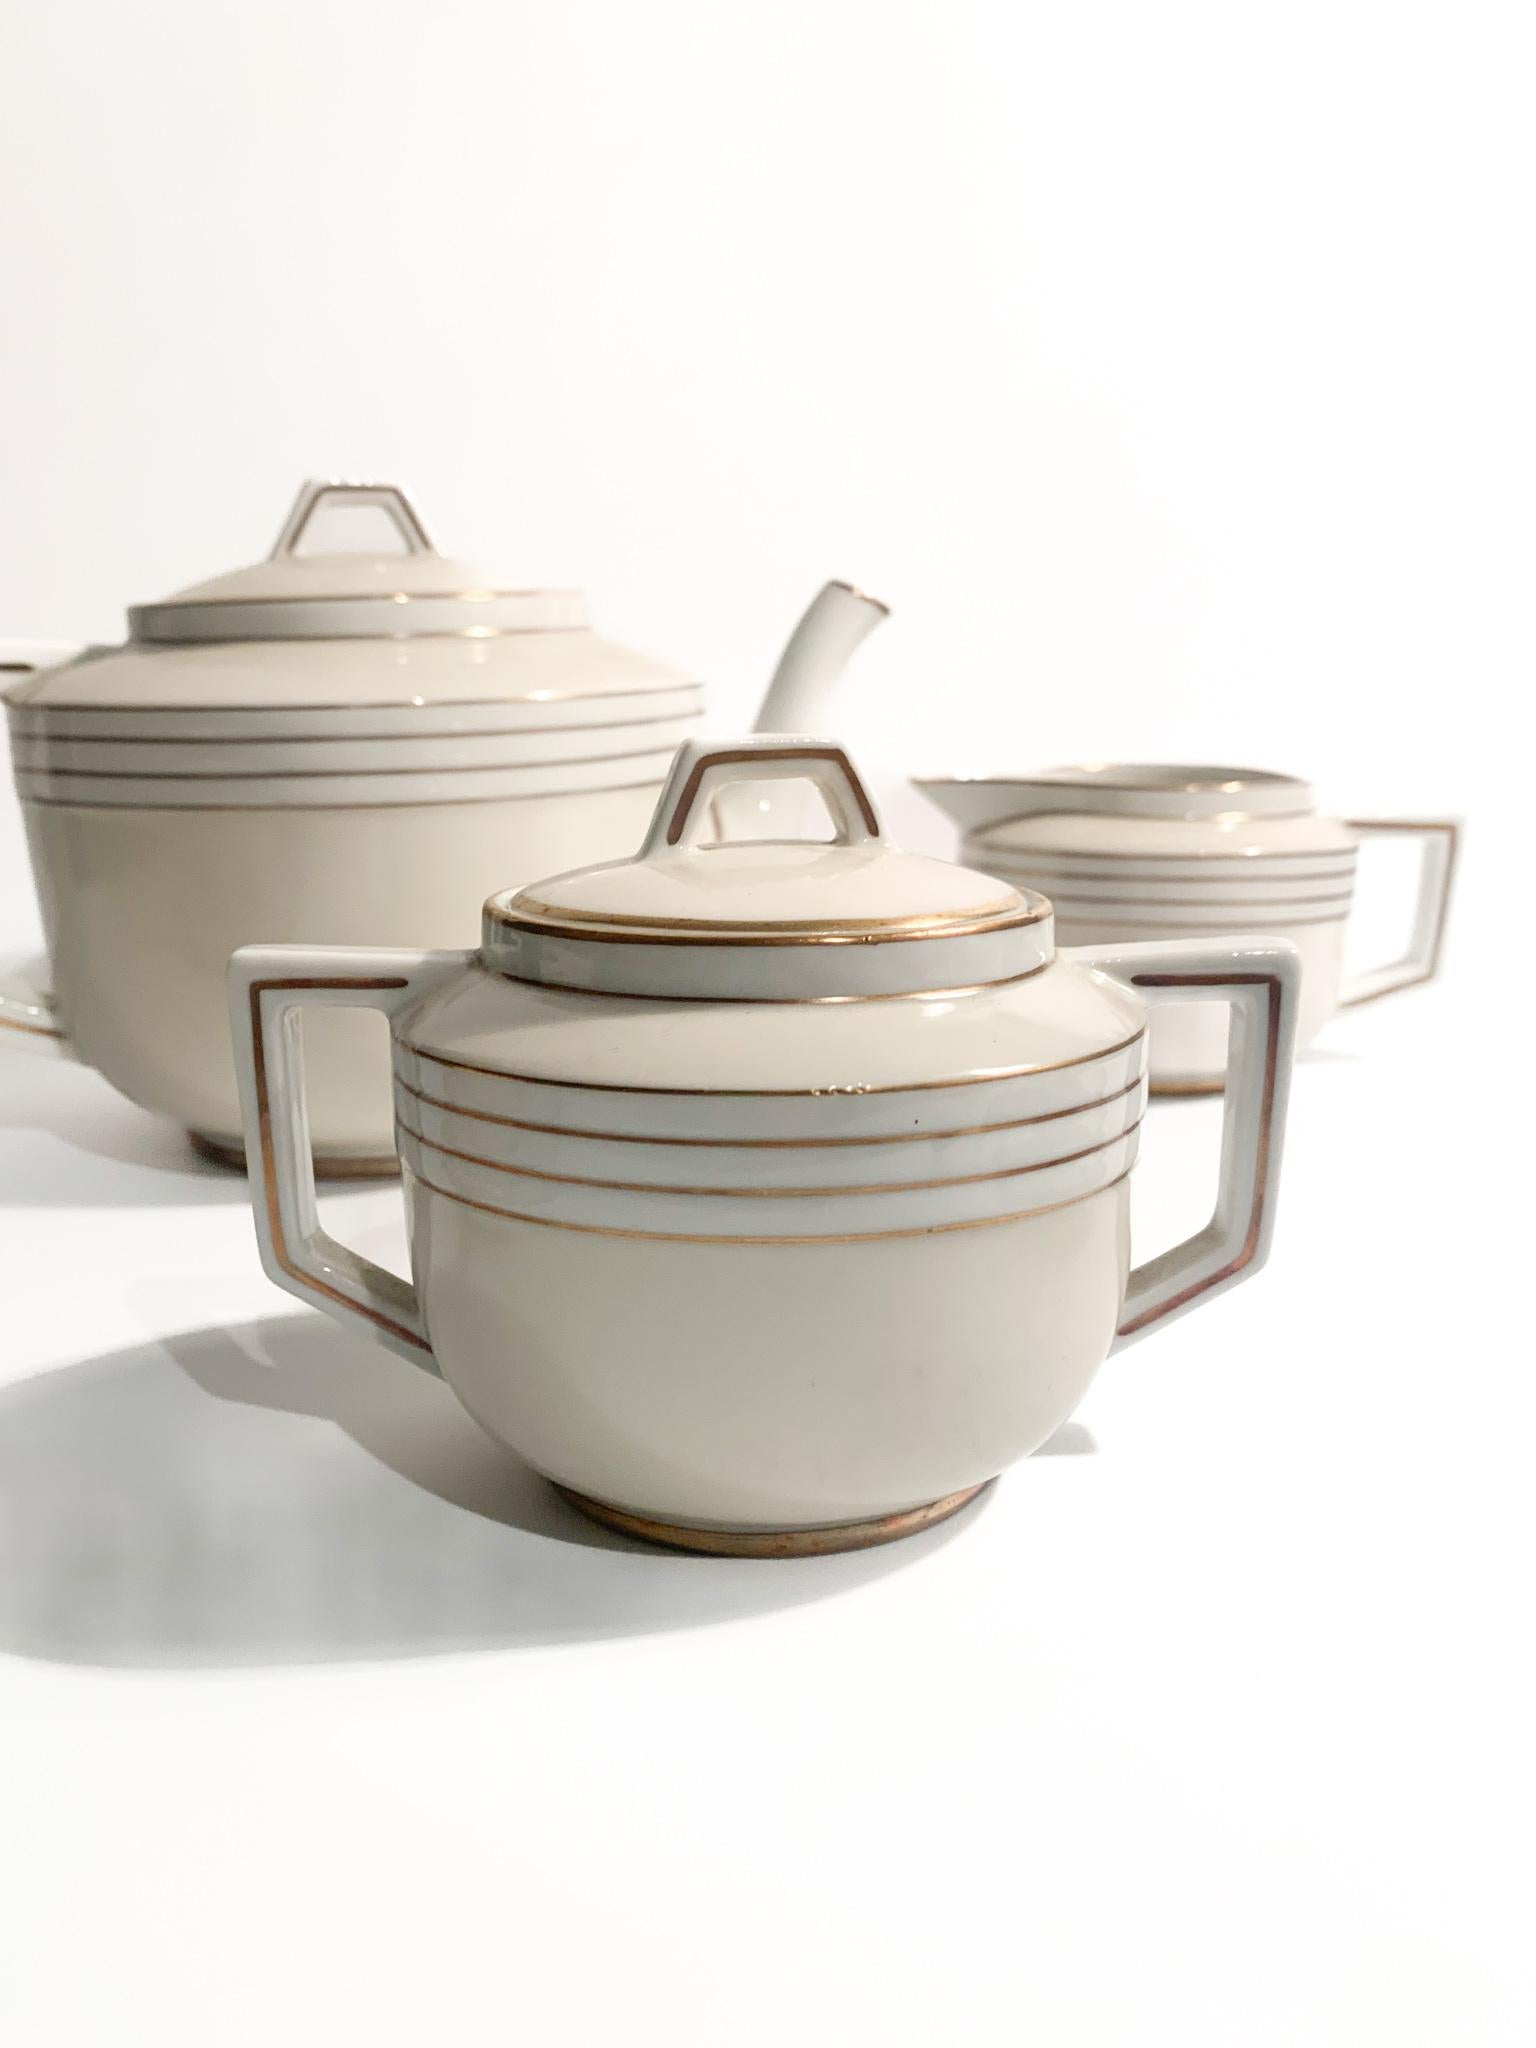 Mid-20th Century Twelve Richard Ginori Decò Tea Set in Porcelain from the 1940s For Sale